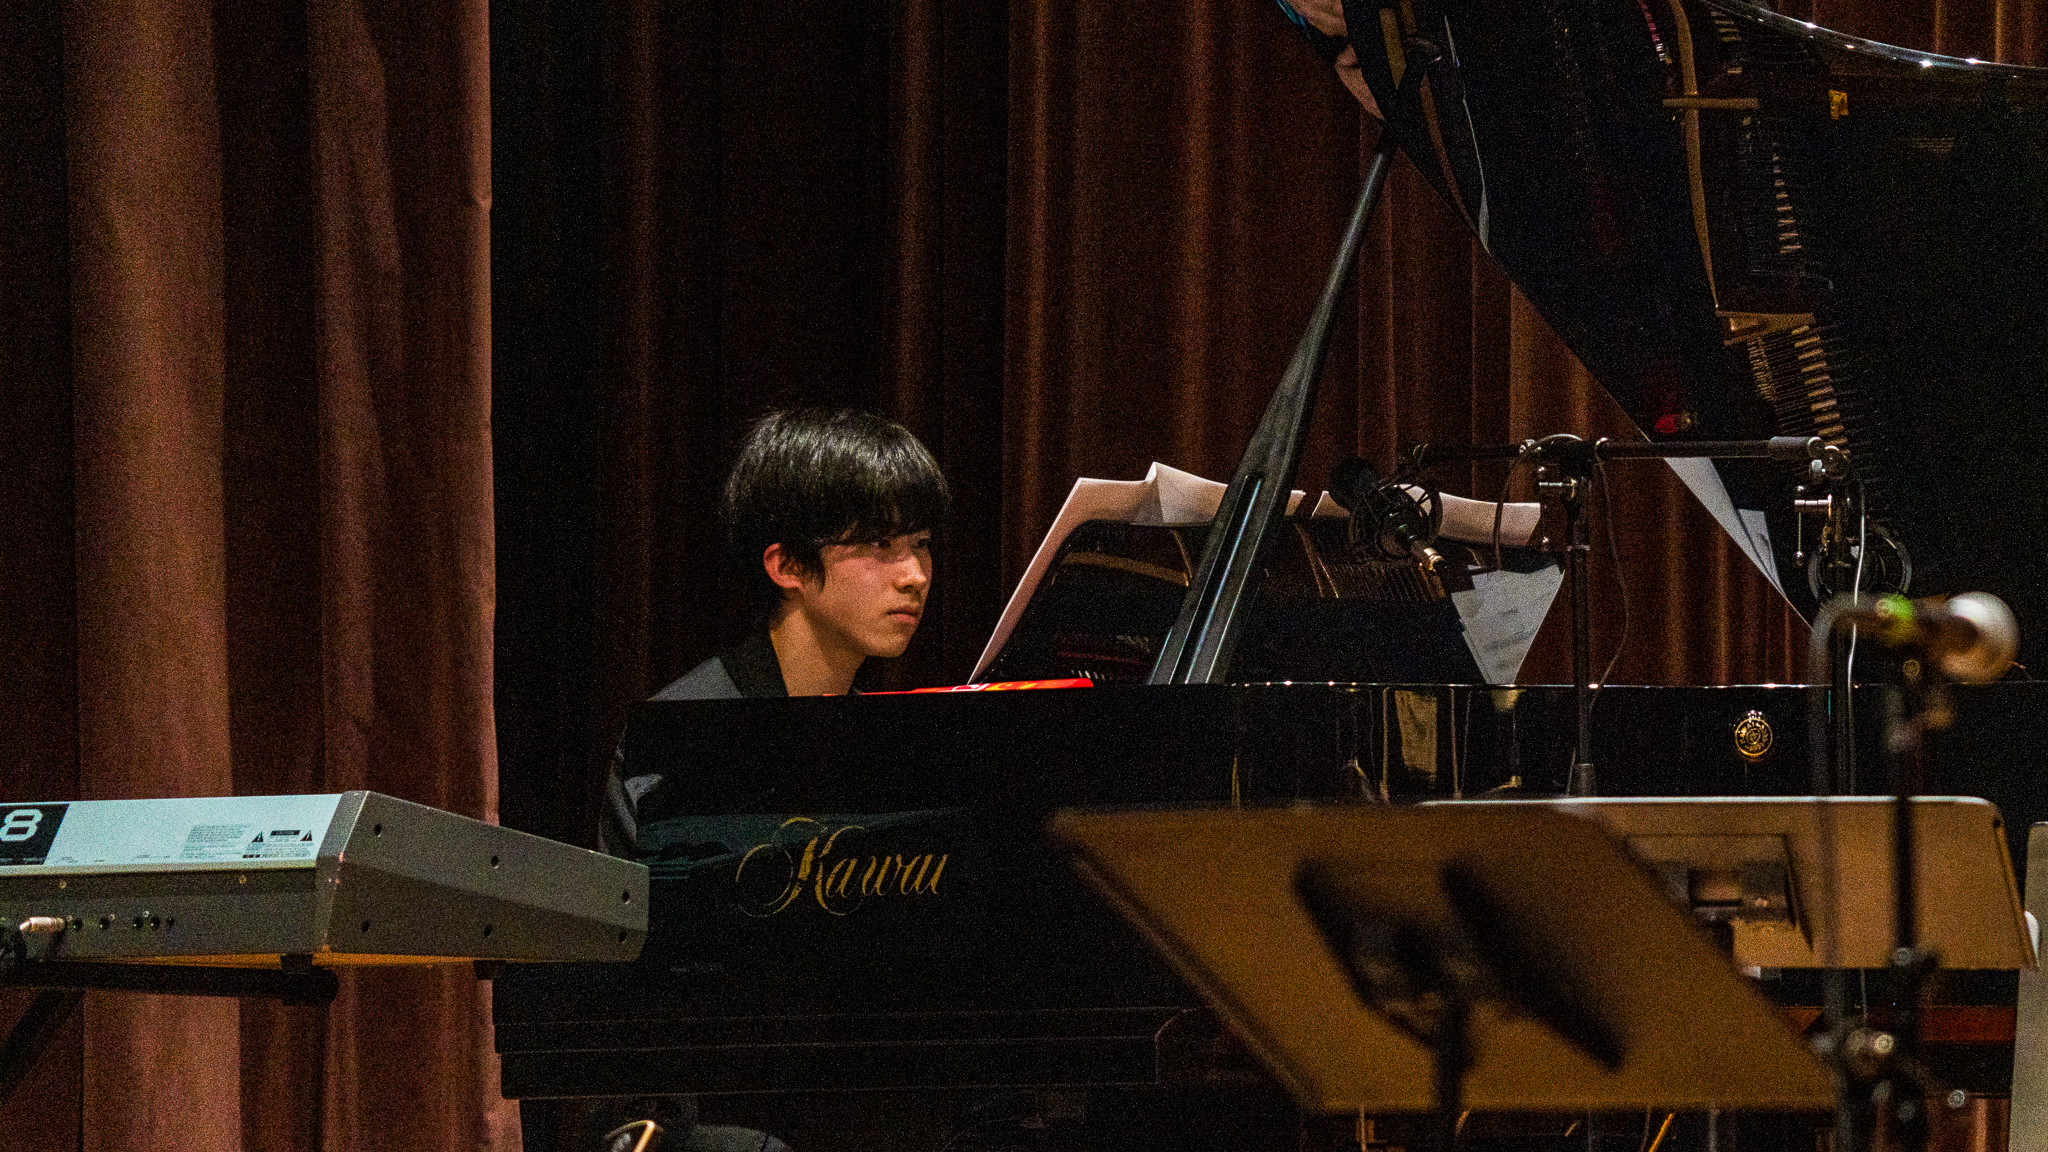 Ikarashi played piano, keyboards, pianica, guitar, and arranged music.